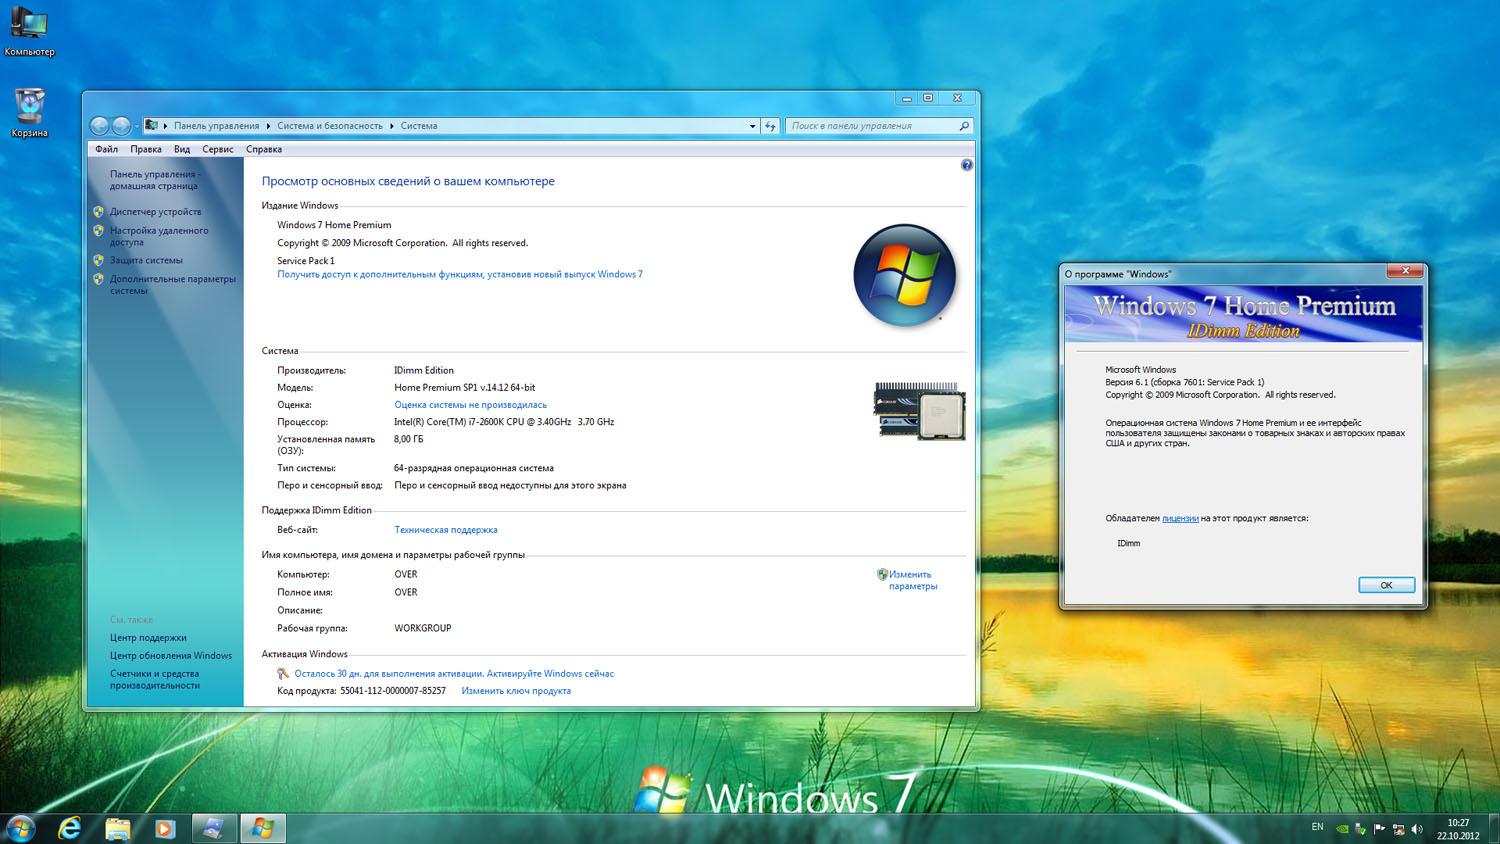 Win 7 re. Виндовс 7 домашняя расширенная диск. Windows 7 домашняя Базовая 64 bit sp1. Виндовс 7 домашний расширенный. Windows 7 Home Premium.